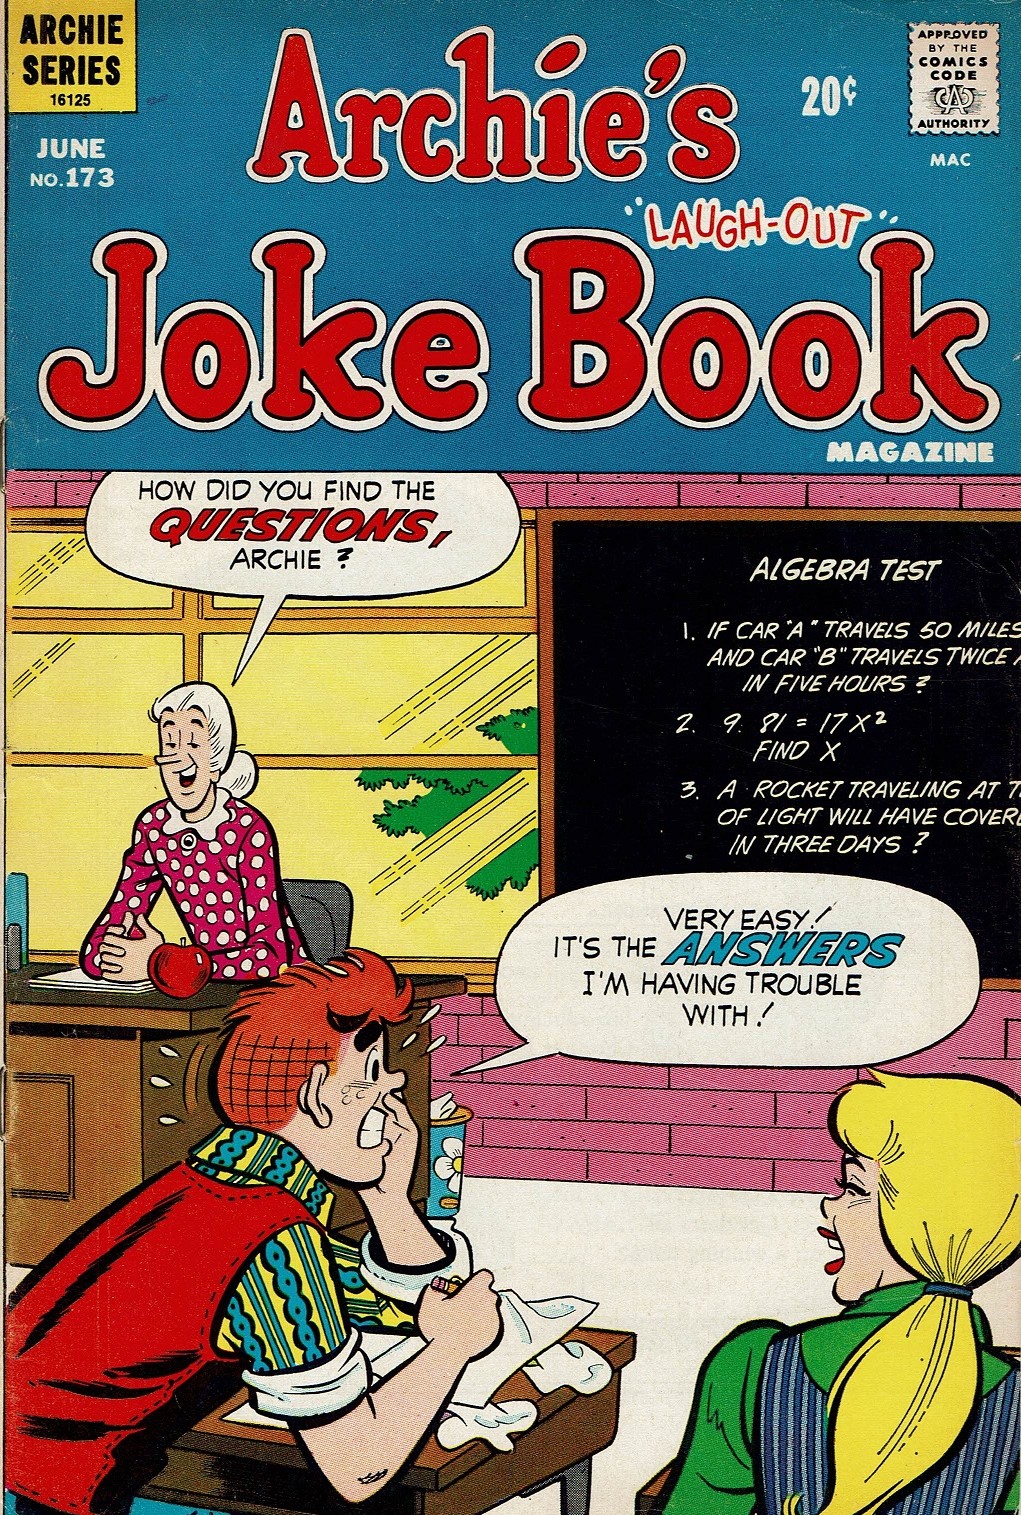 Archie's Joke Book Magazine issue 173 - Page 1